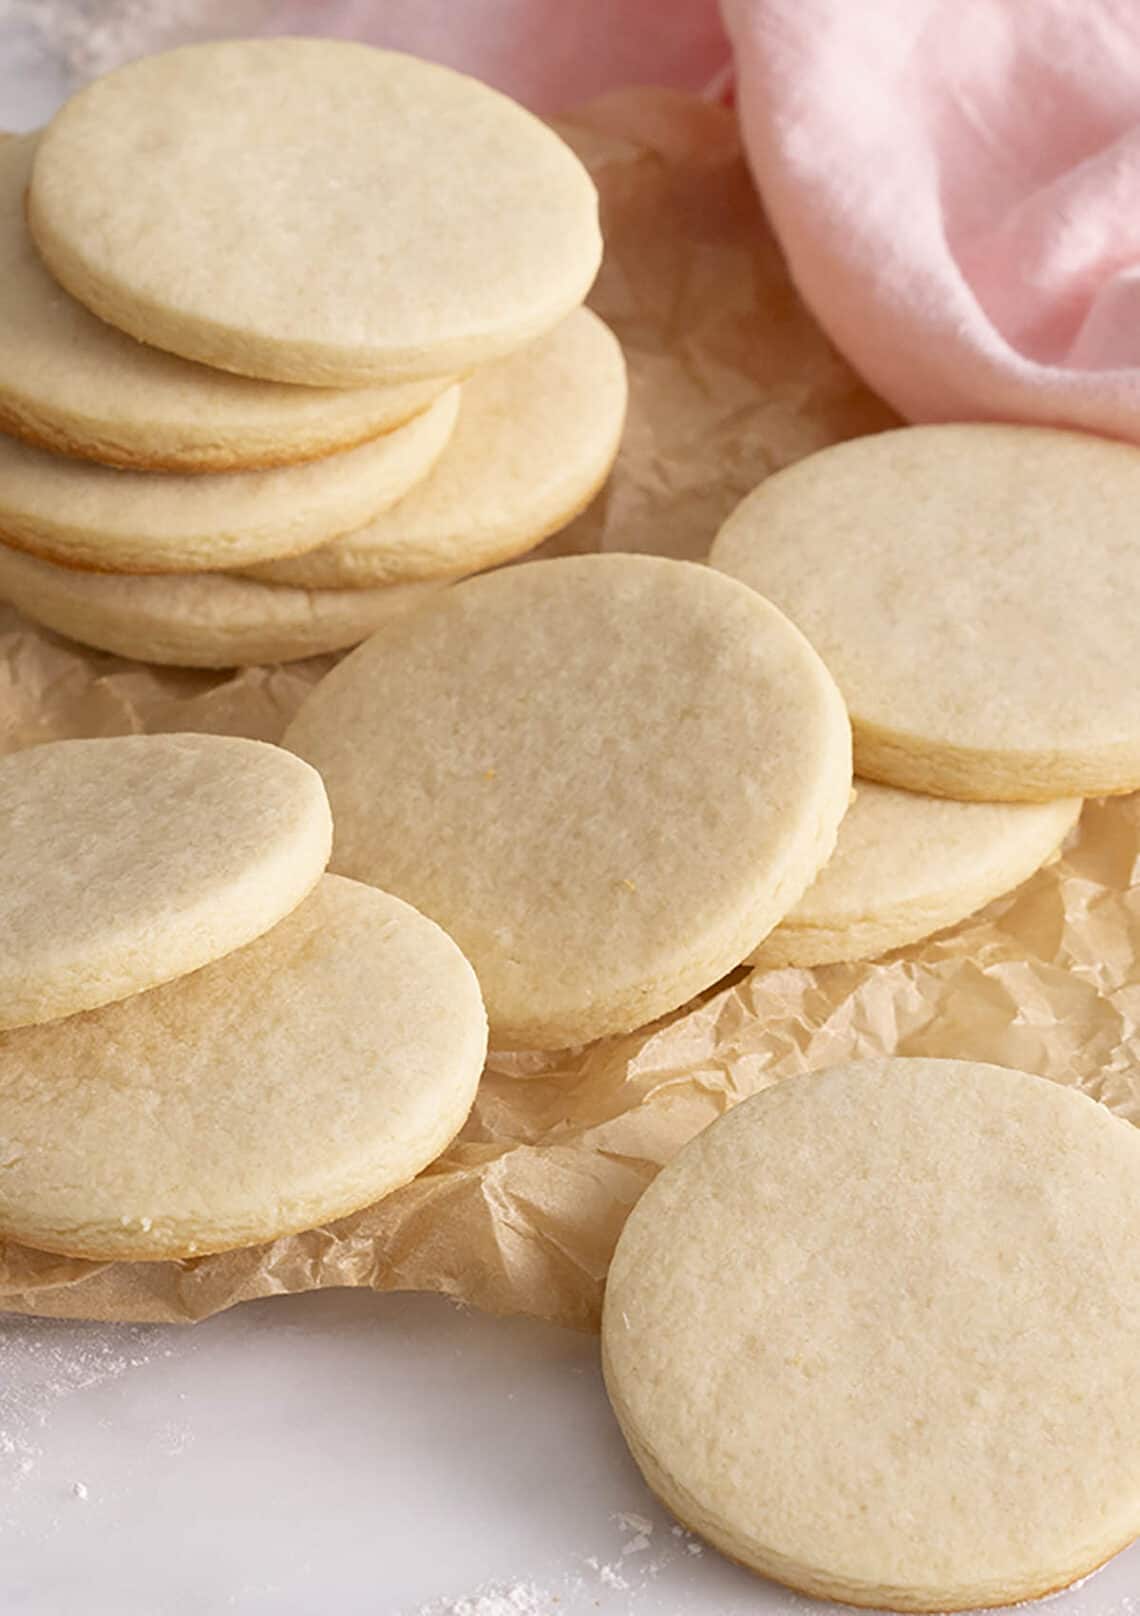 Best Christmas Cookies No Sugar : Homemade lemon cookies from scratch ...